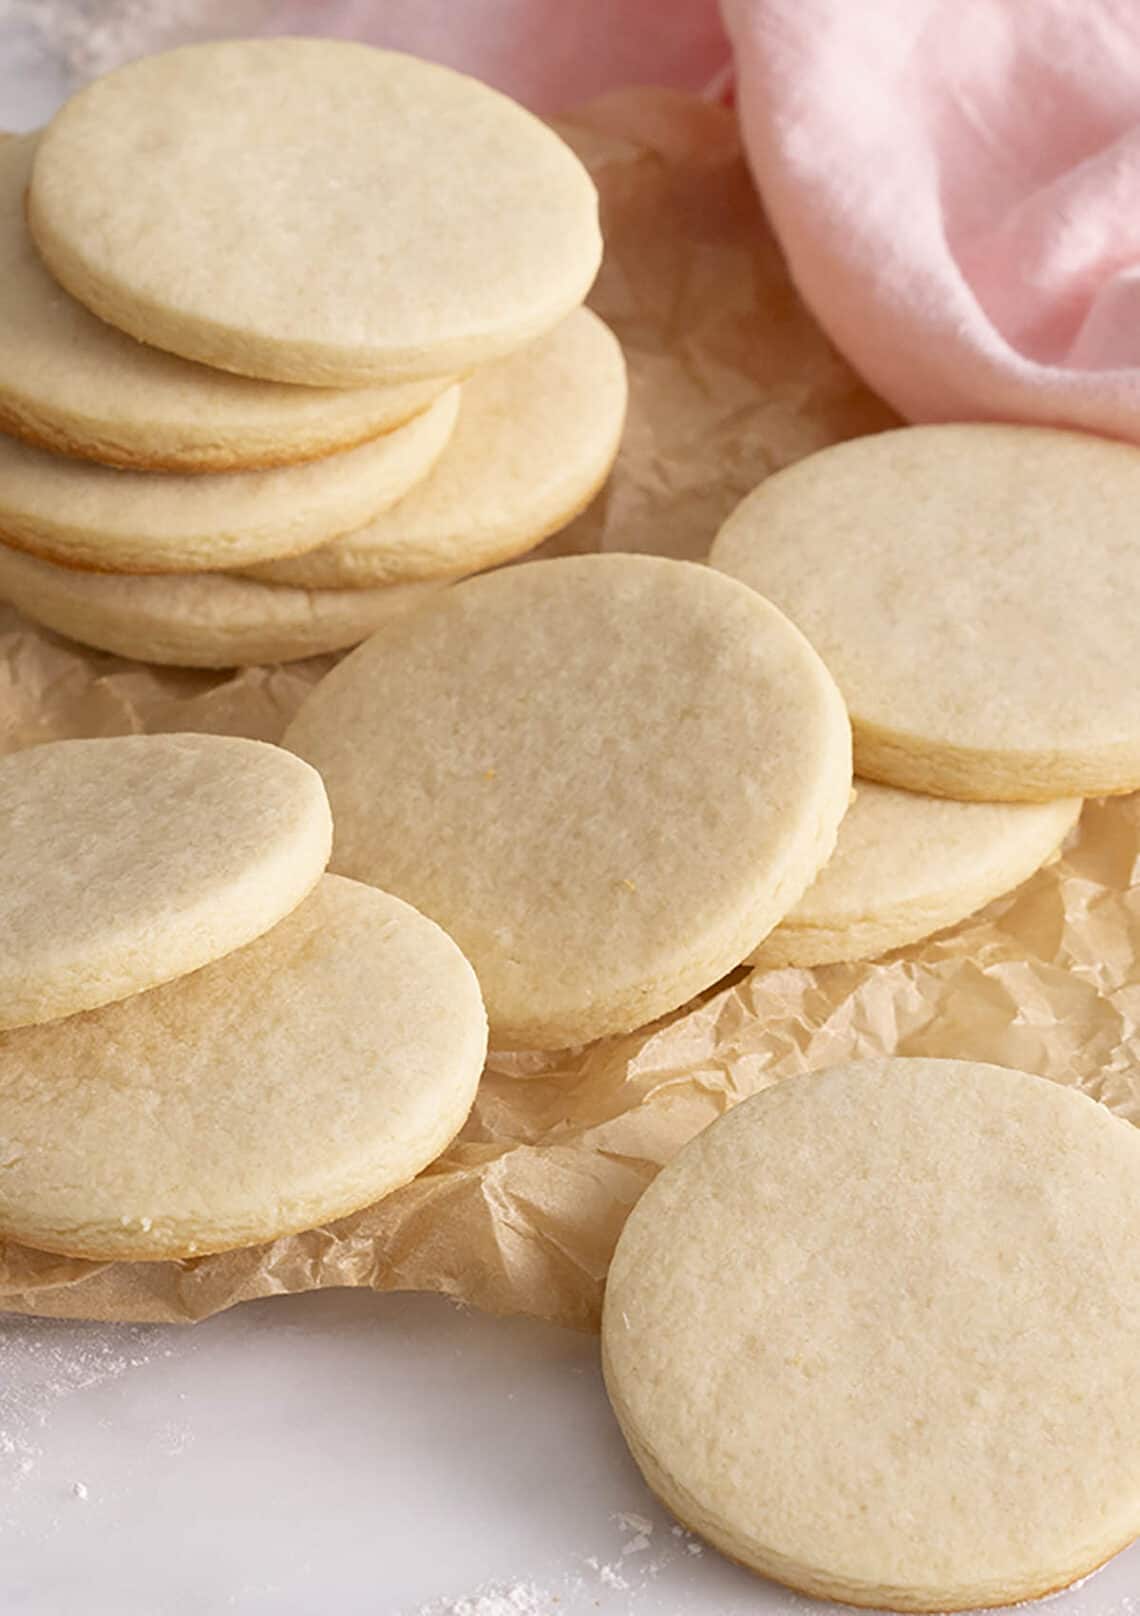 Best Christmas Cookies No Sugar : Homemade lemon cookies from scratch ...